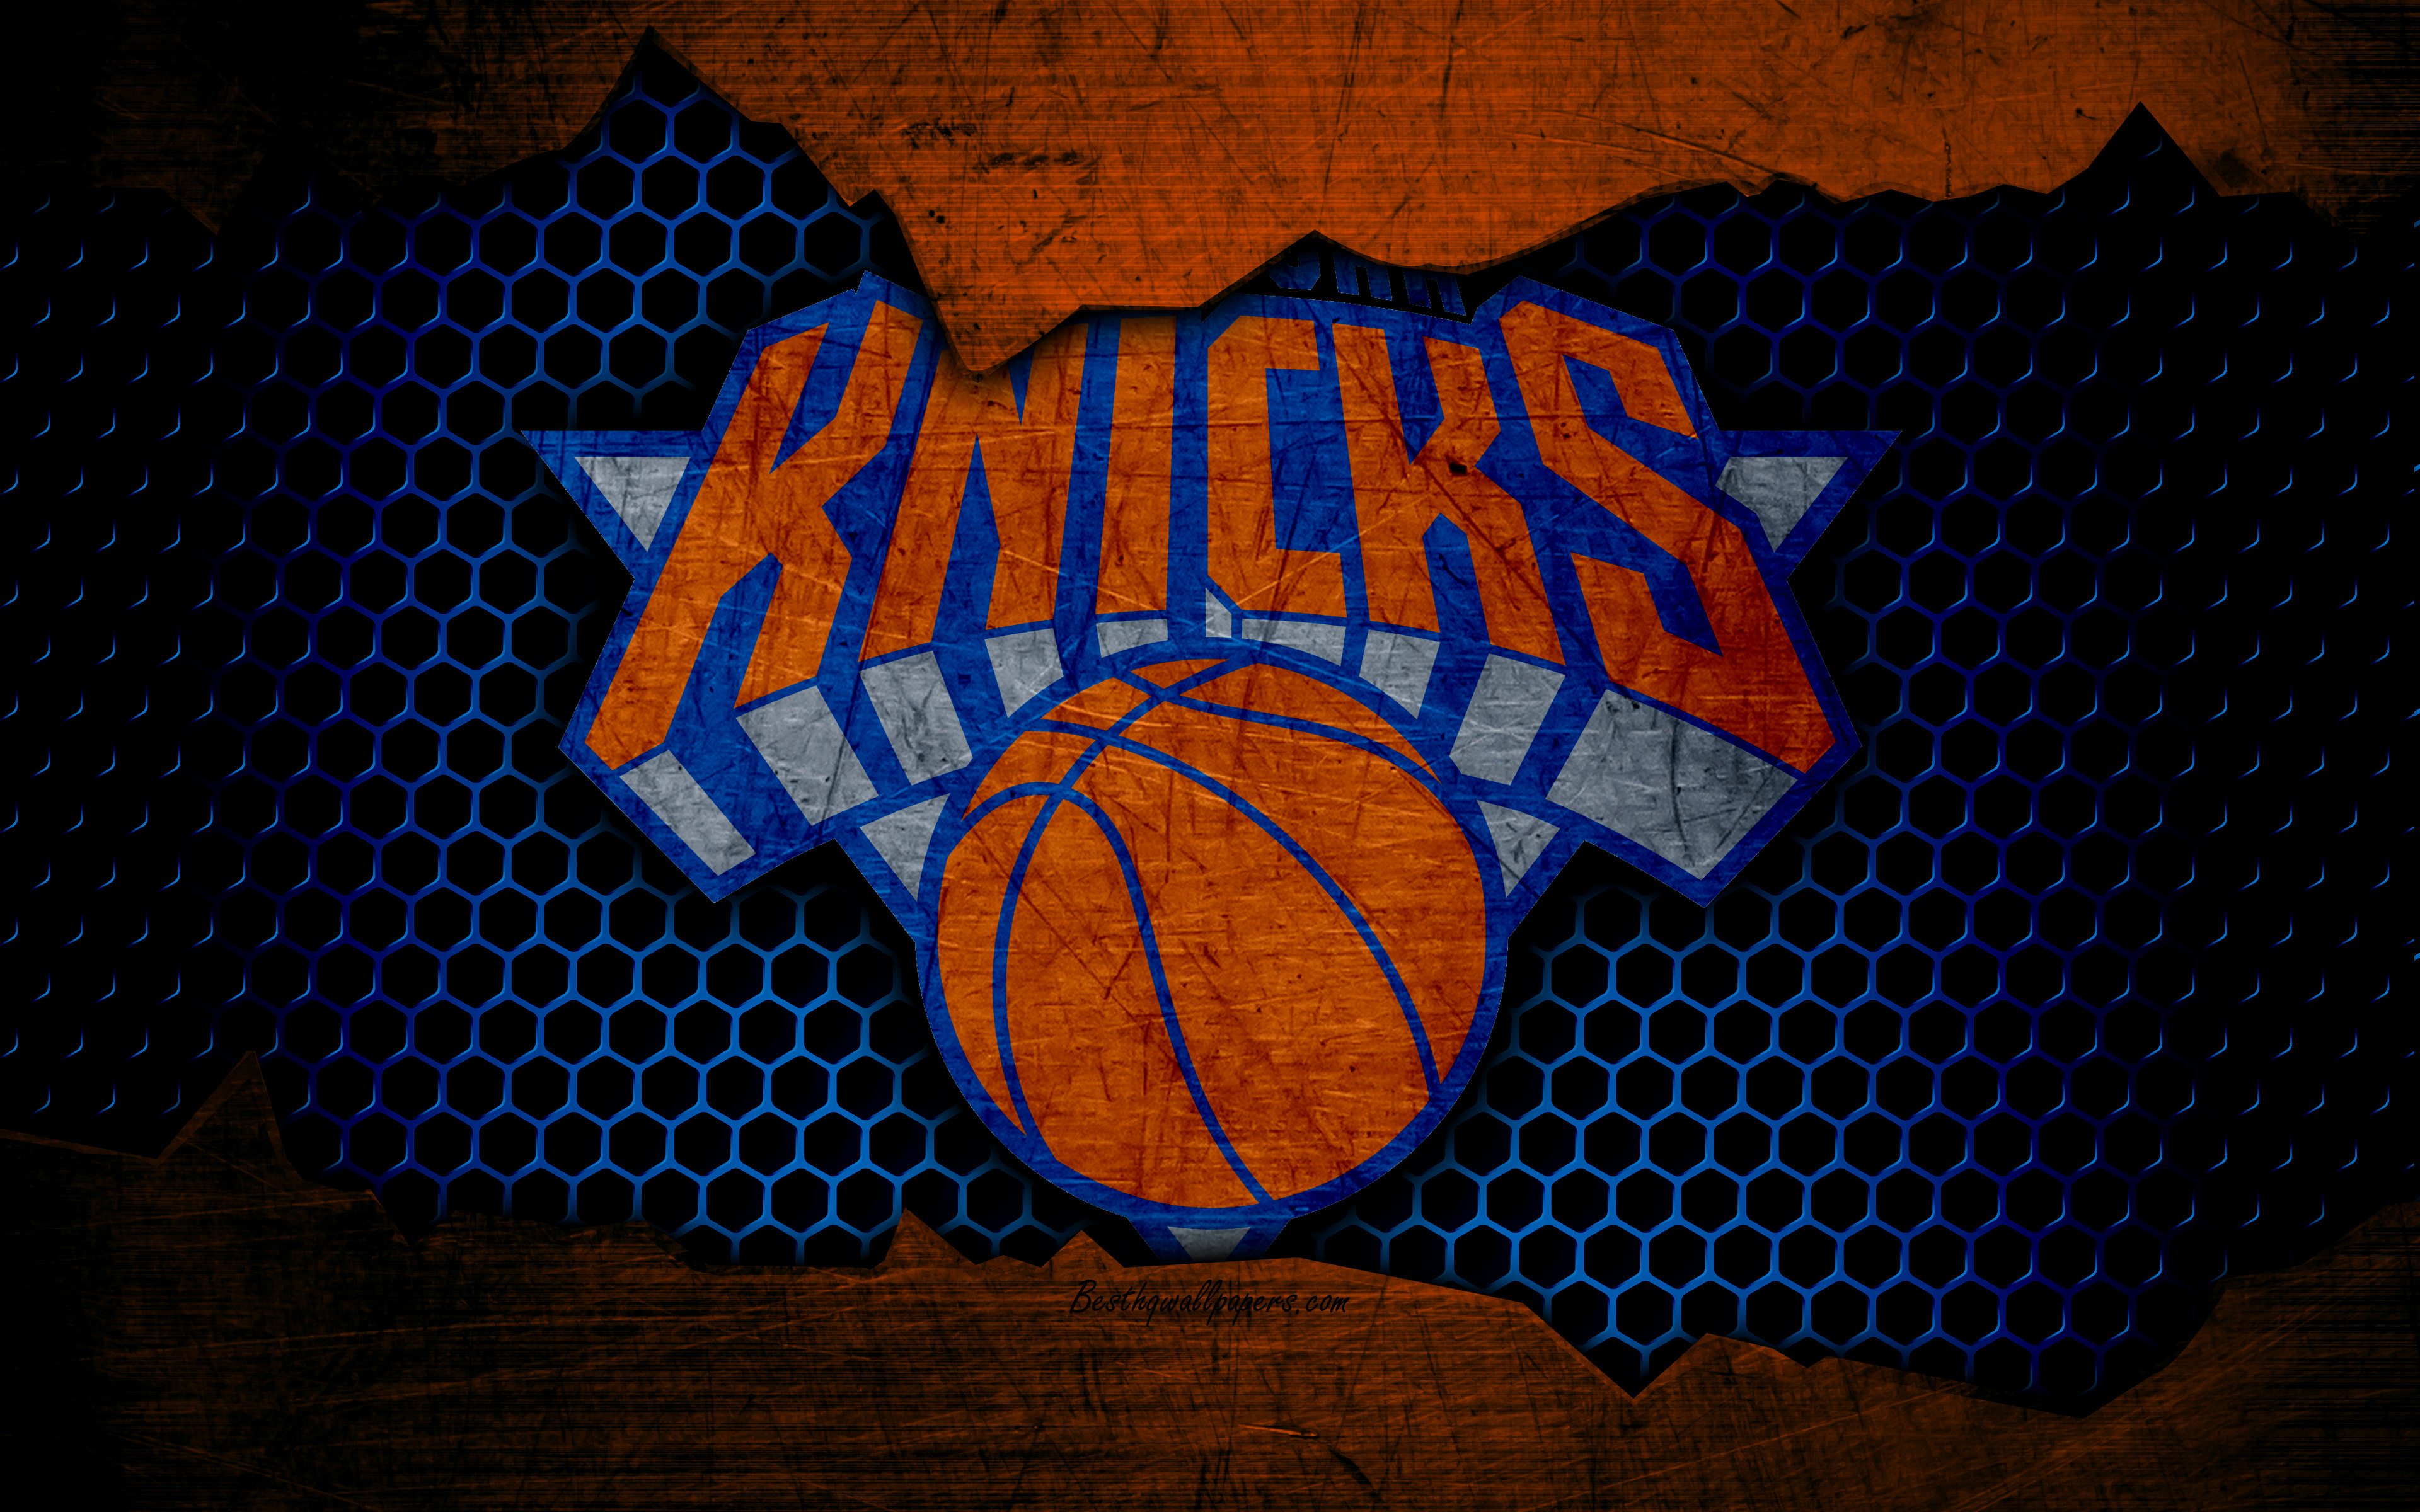 NY Knicks Wallpapers Wallpaper Cave